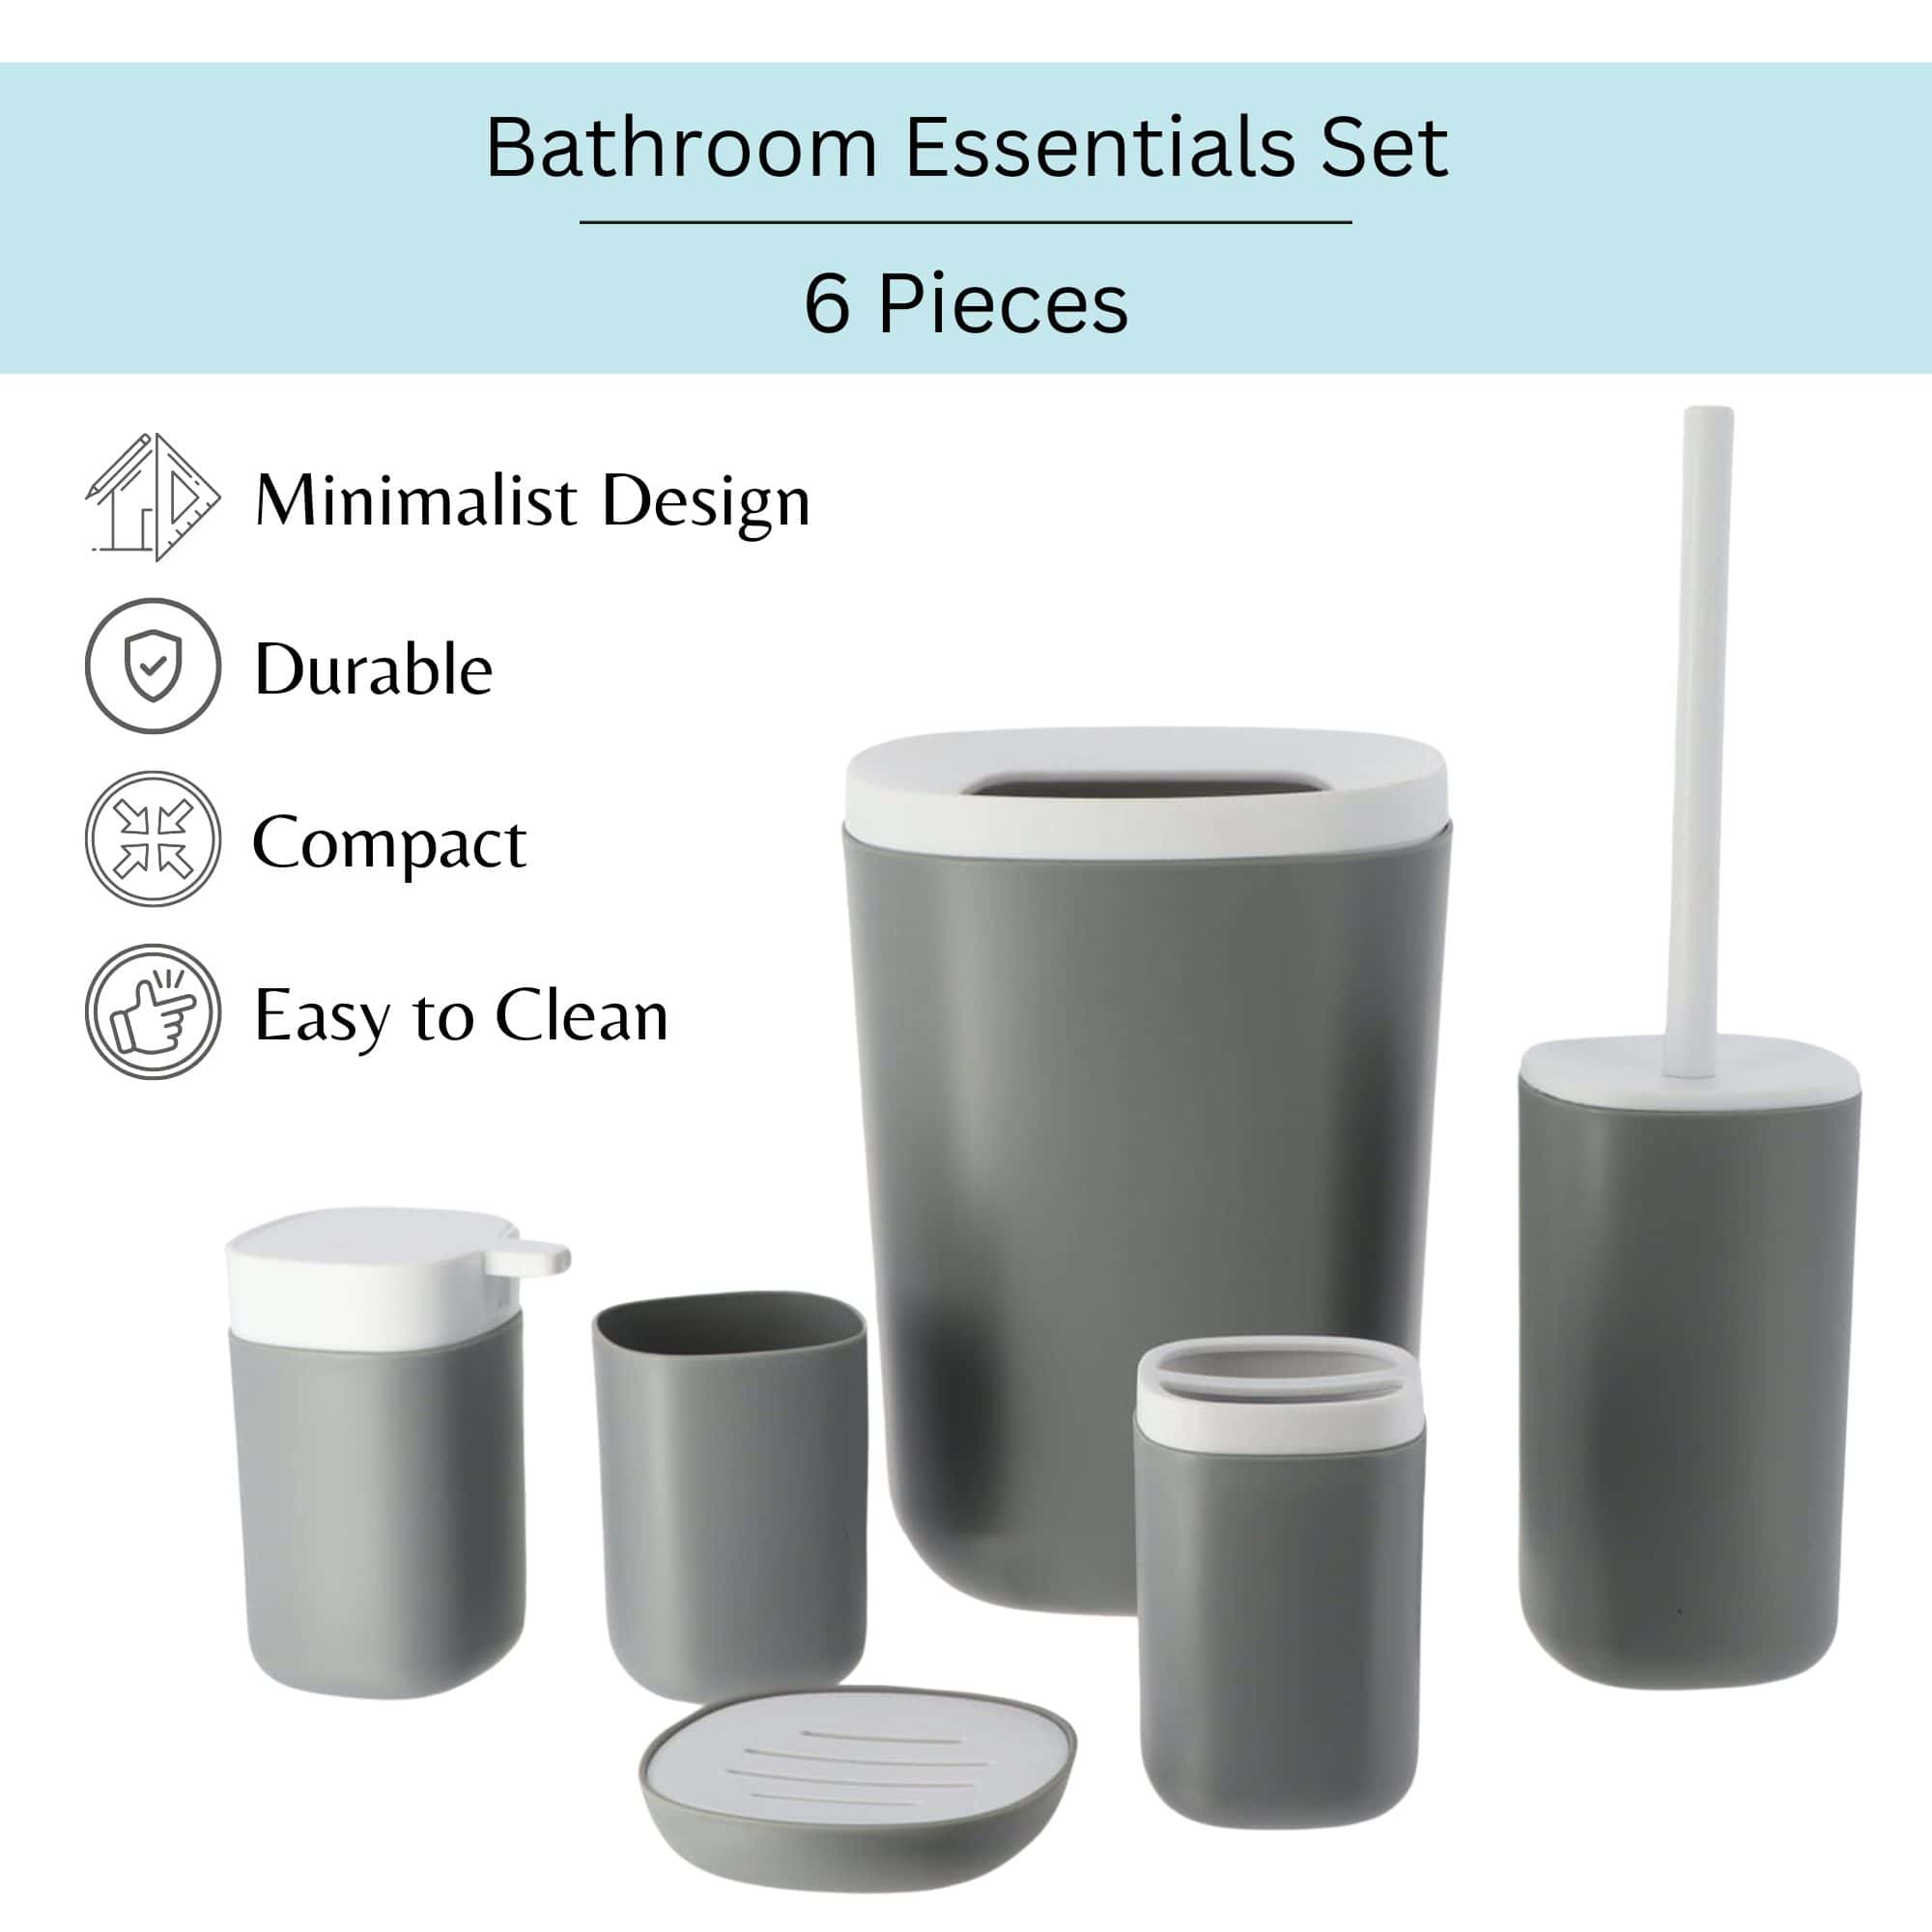 Bathroom essentials set 6 pieces minimalist design, durable, compact, easy to clean